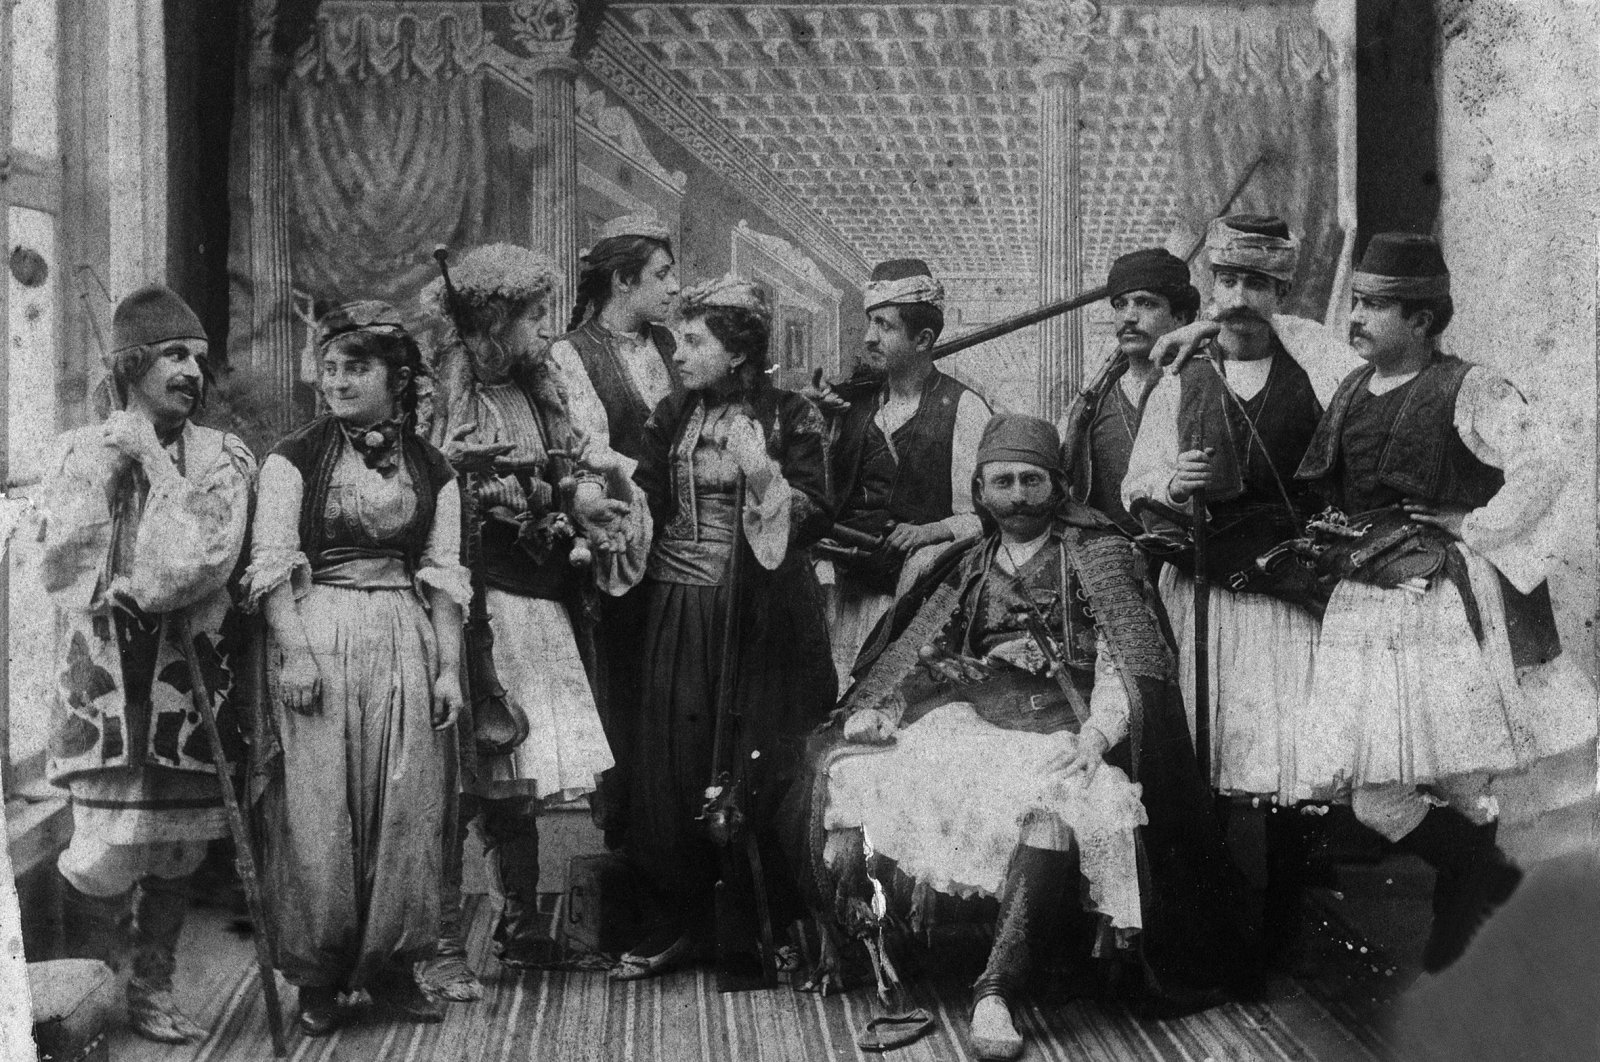 Actors of the play "Besa" by the Osmanlı Theater Company, founded by Ottoman Armenian theater director Hagop Vartovyan, better known as Güllü Agop. (Courtesy of Yapı Kredi Culture Arts)